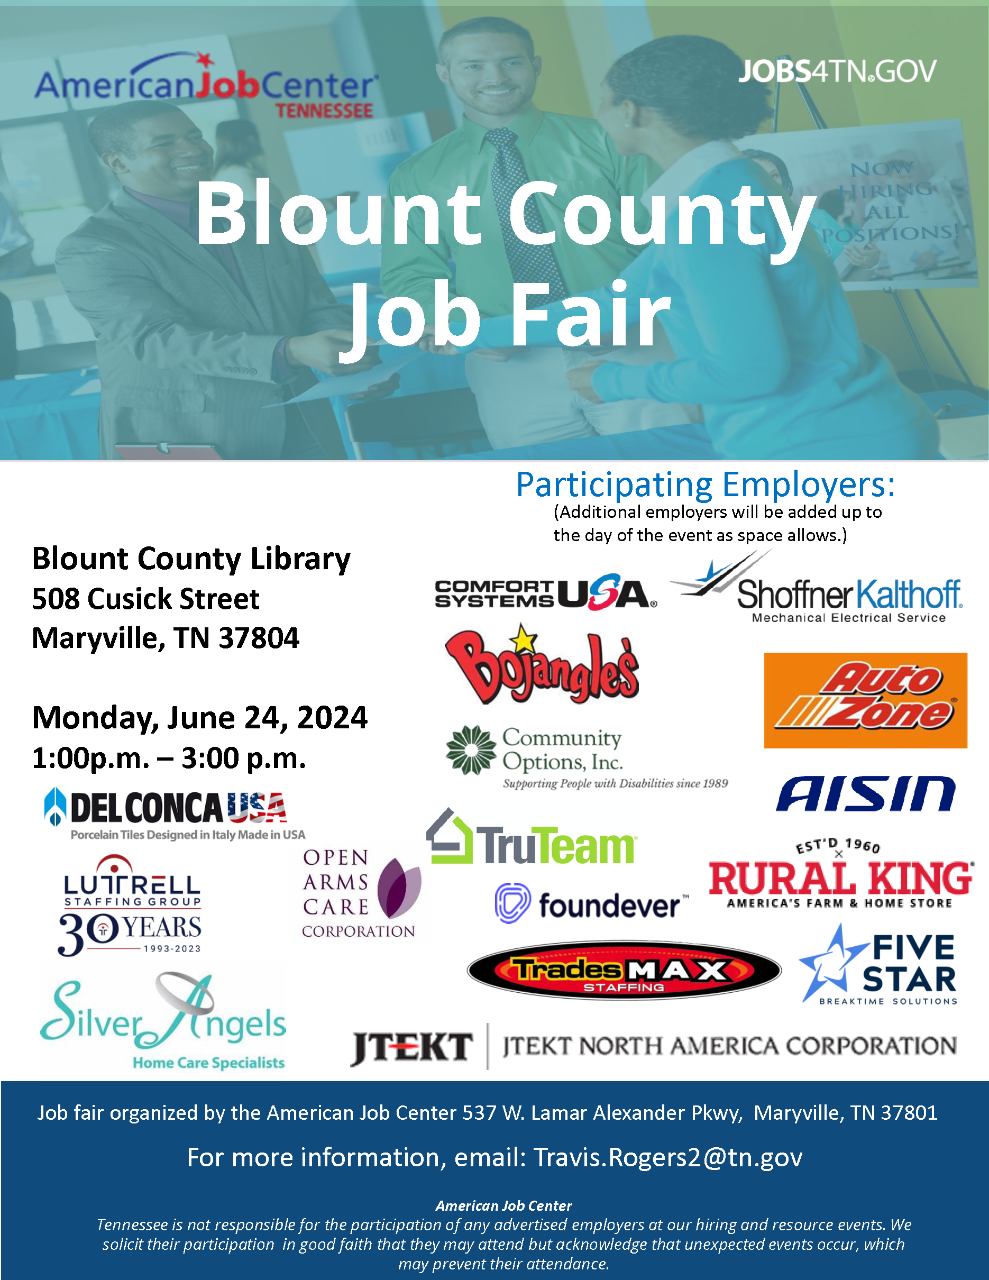 The Blount County job fair is June 24